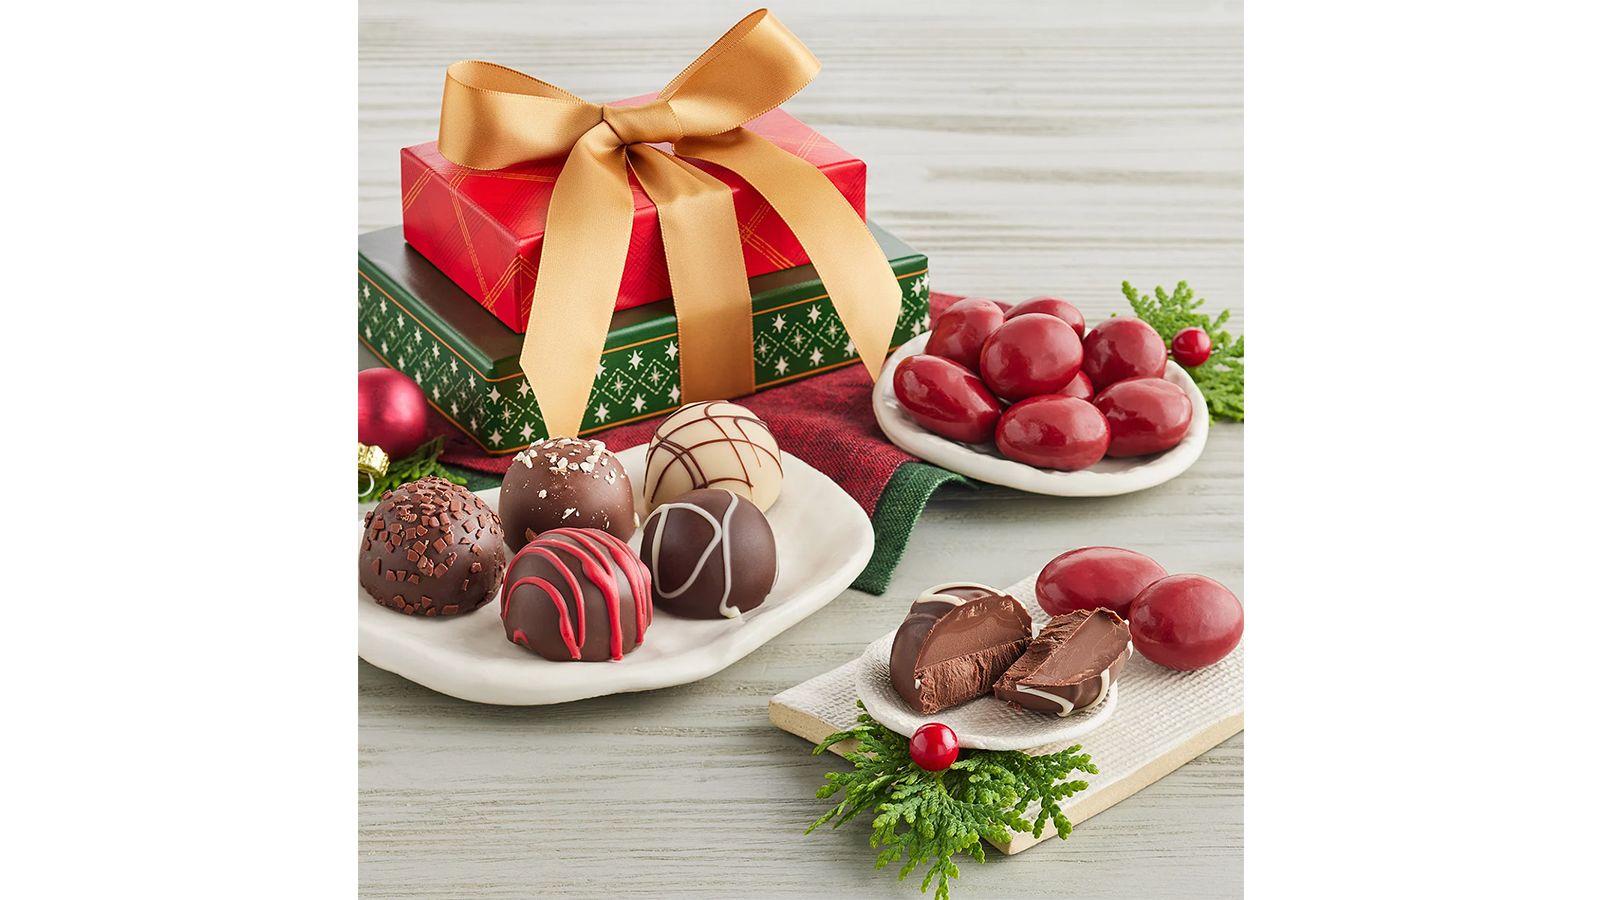 https://media.cnn.com/api/v1/images/stellar/prod/harry-david-holiday-sweets-mini-gift.jpg?c=original